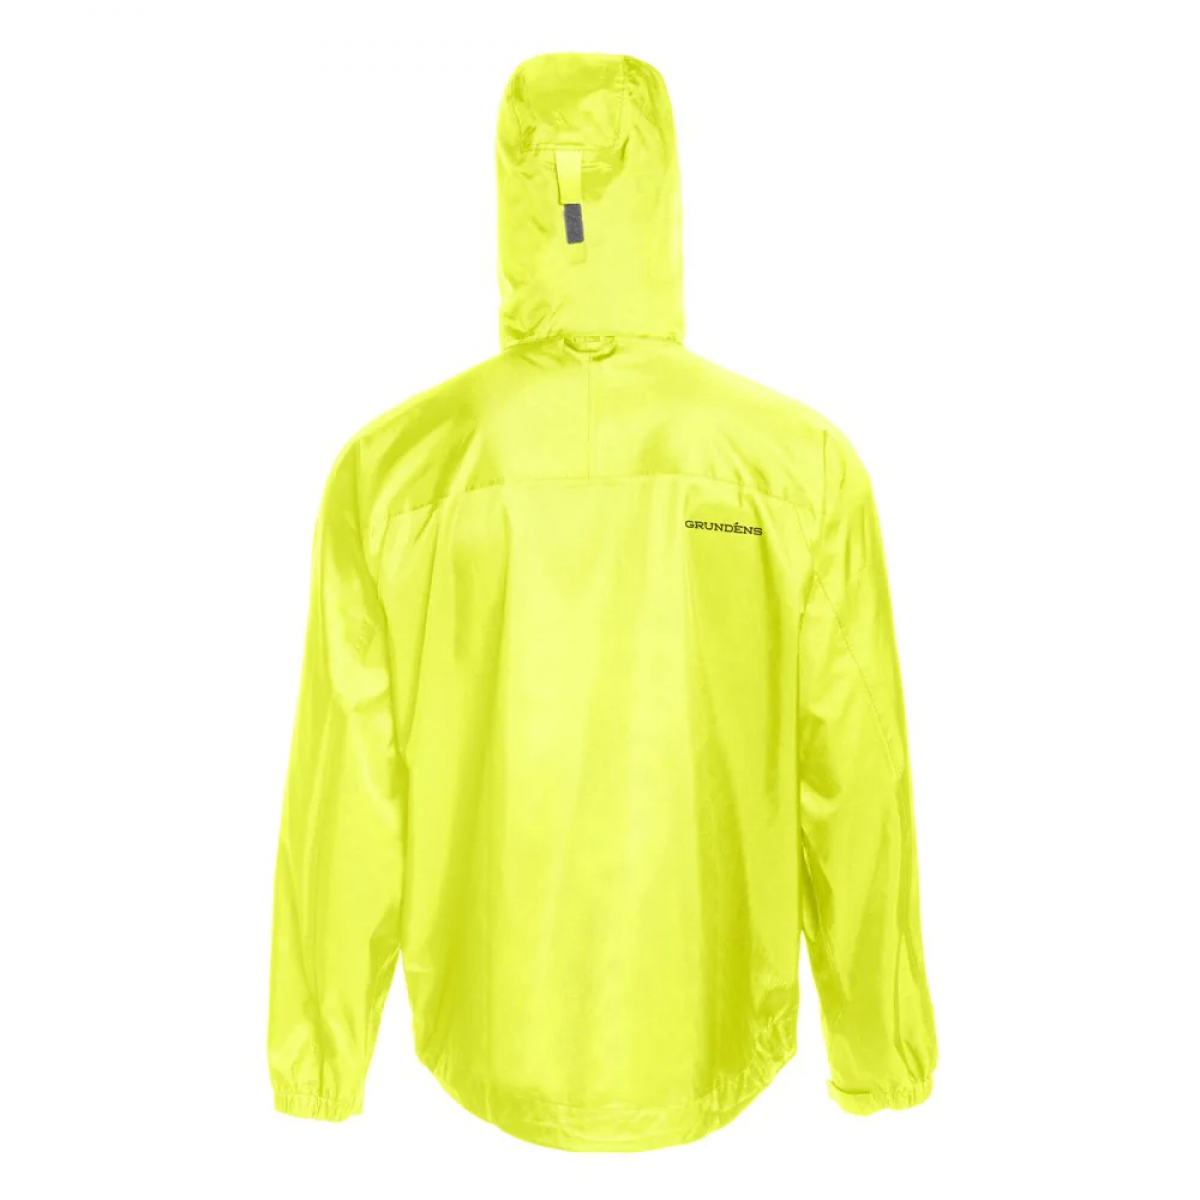 Grundens Weather Watch Jacket Yellow Size XS - 10361 - 10361-730-0012 ...